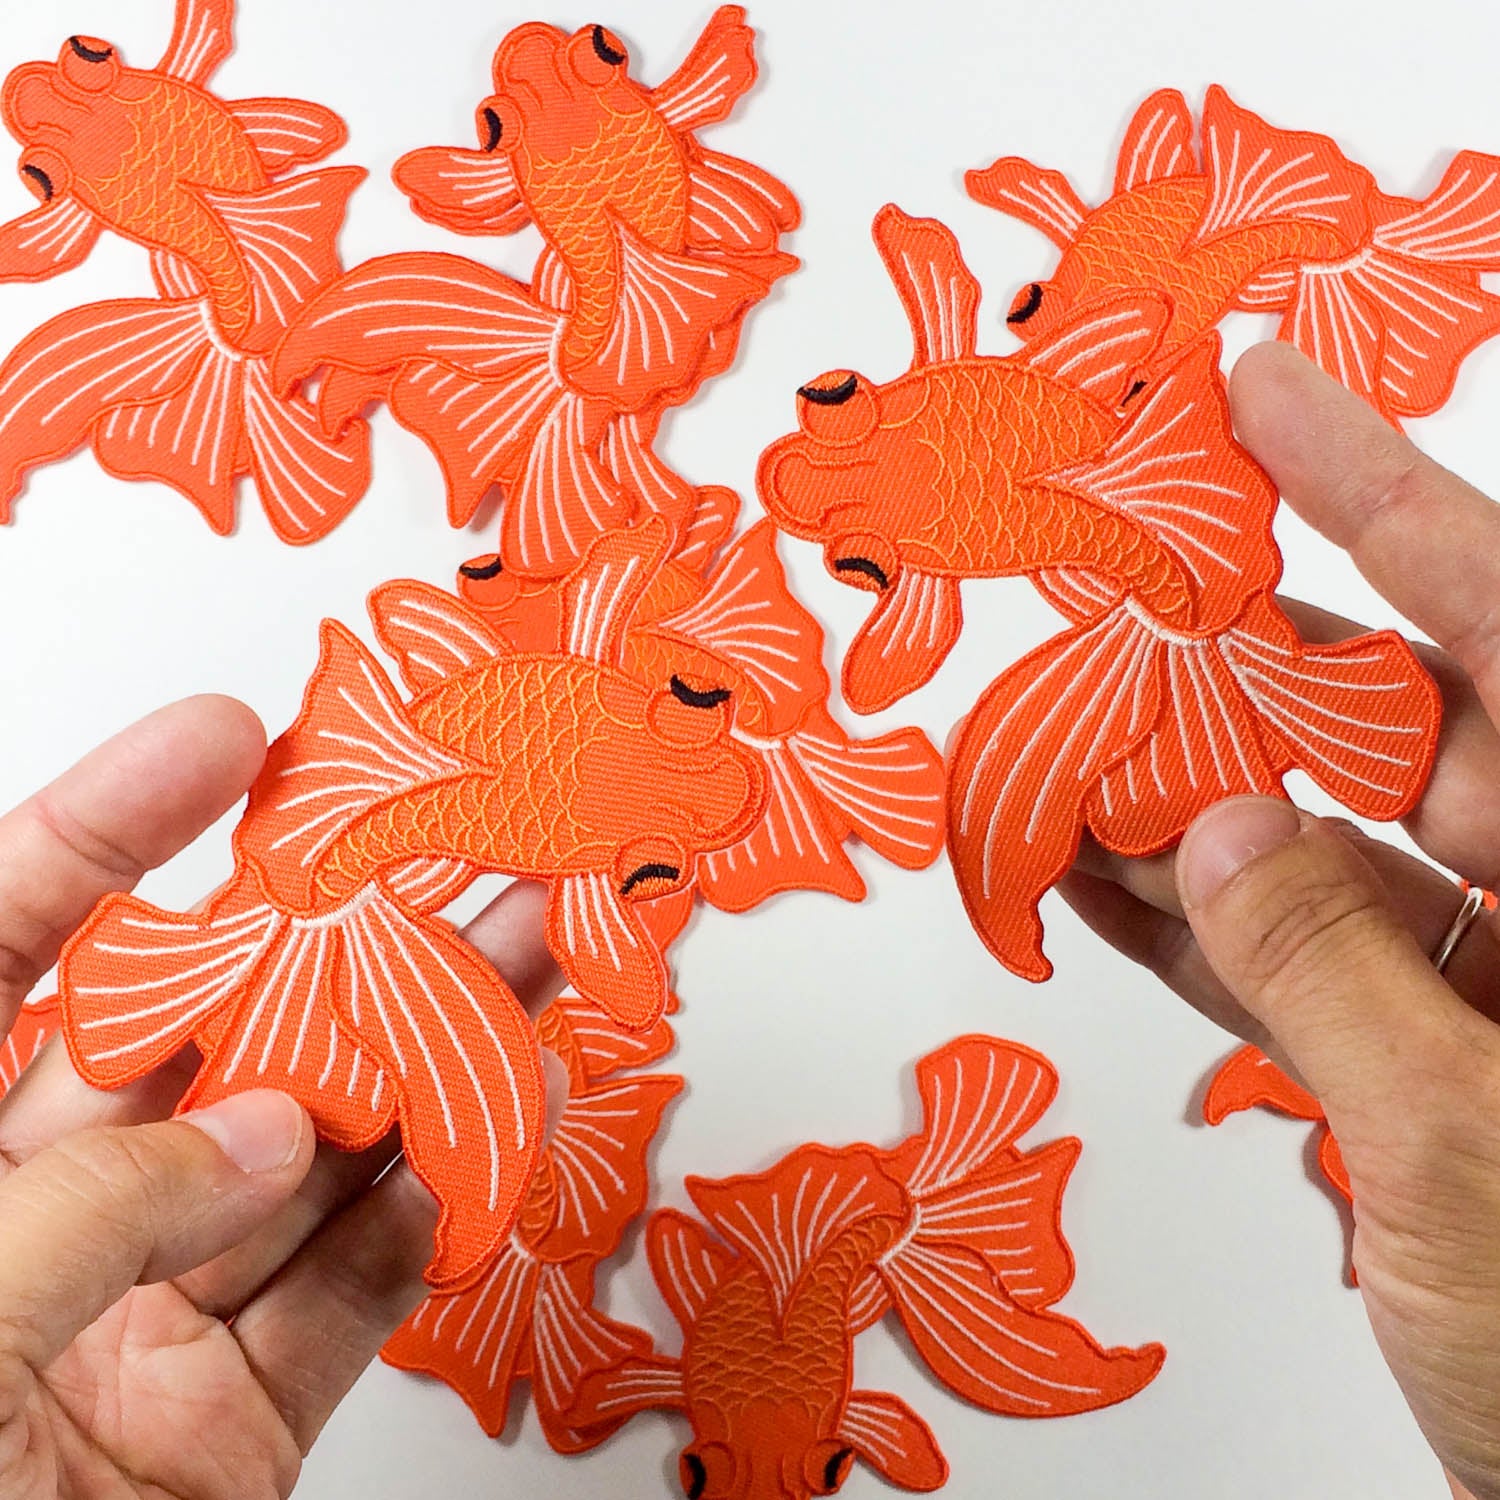 MASSIVE Japanese Koi Fish Statement Iron on Embroidered Patch Big